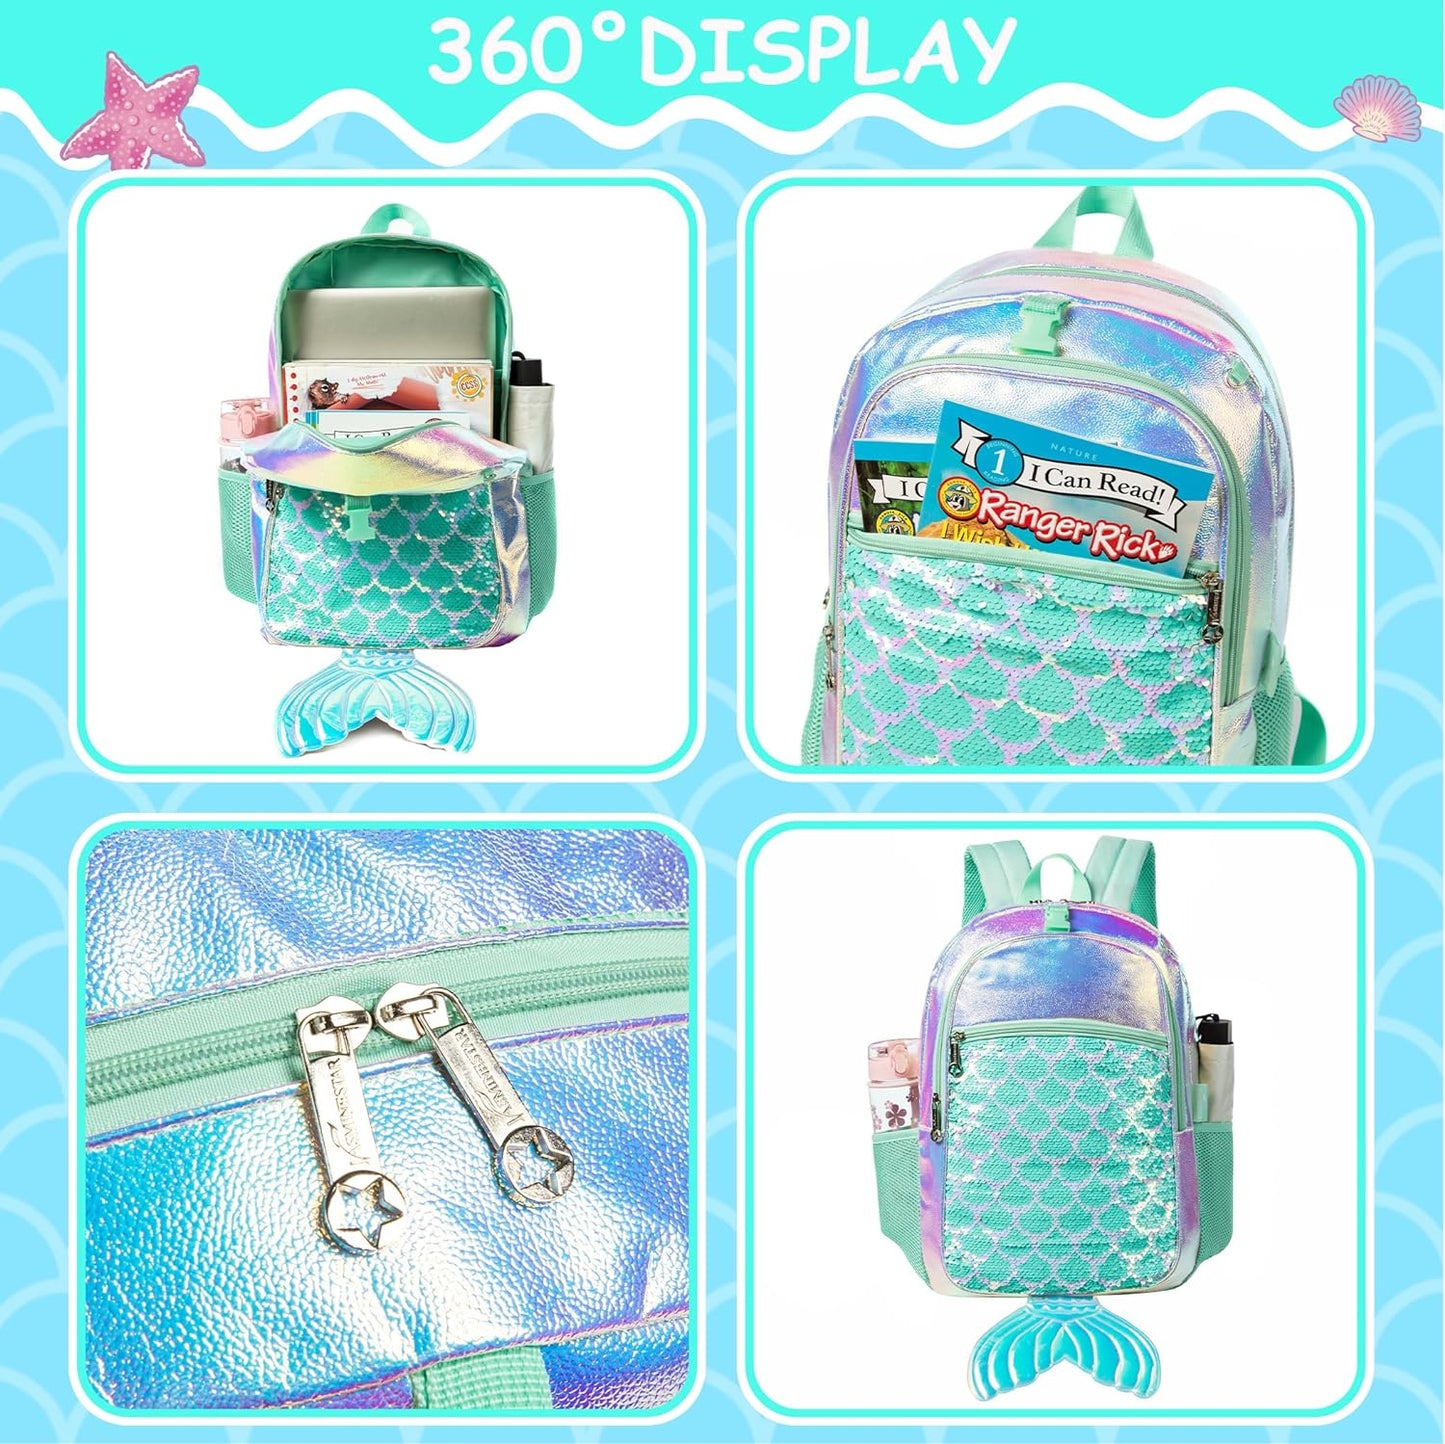 Backpack for Girls Mermaid Magic Sequin School Bag with Lunch Box Girls Backpack Set for Elementary Preschool Bookbag